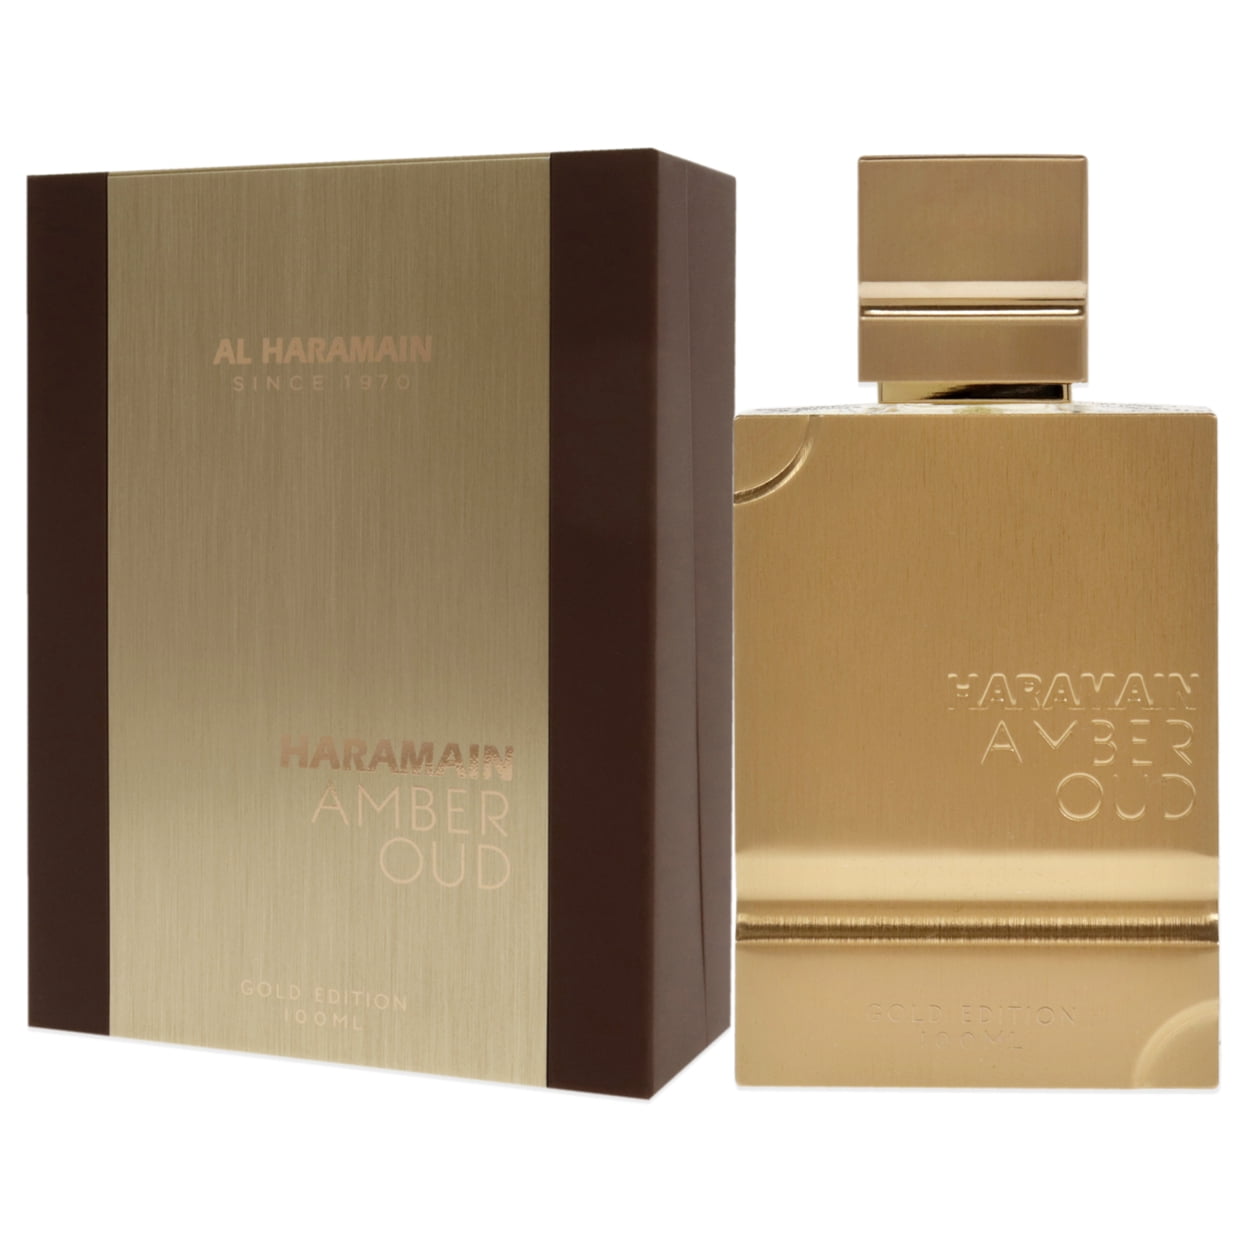 Al Haramain Amber Oud Gold Edition Eau de Parfum Spray 3.4oz Unisex